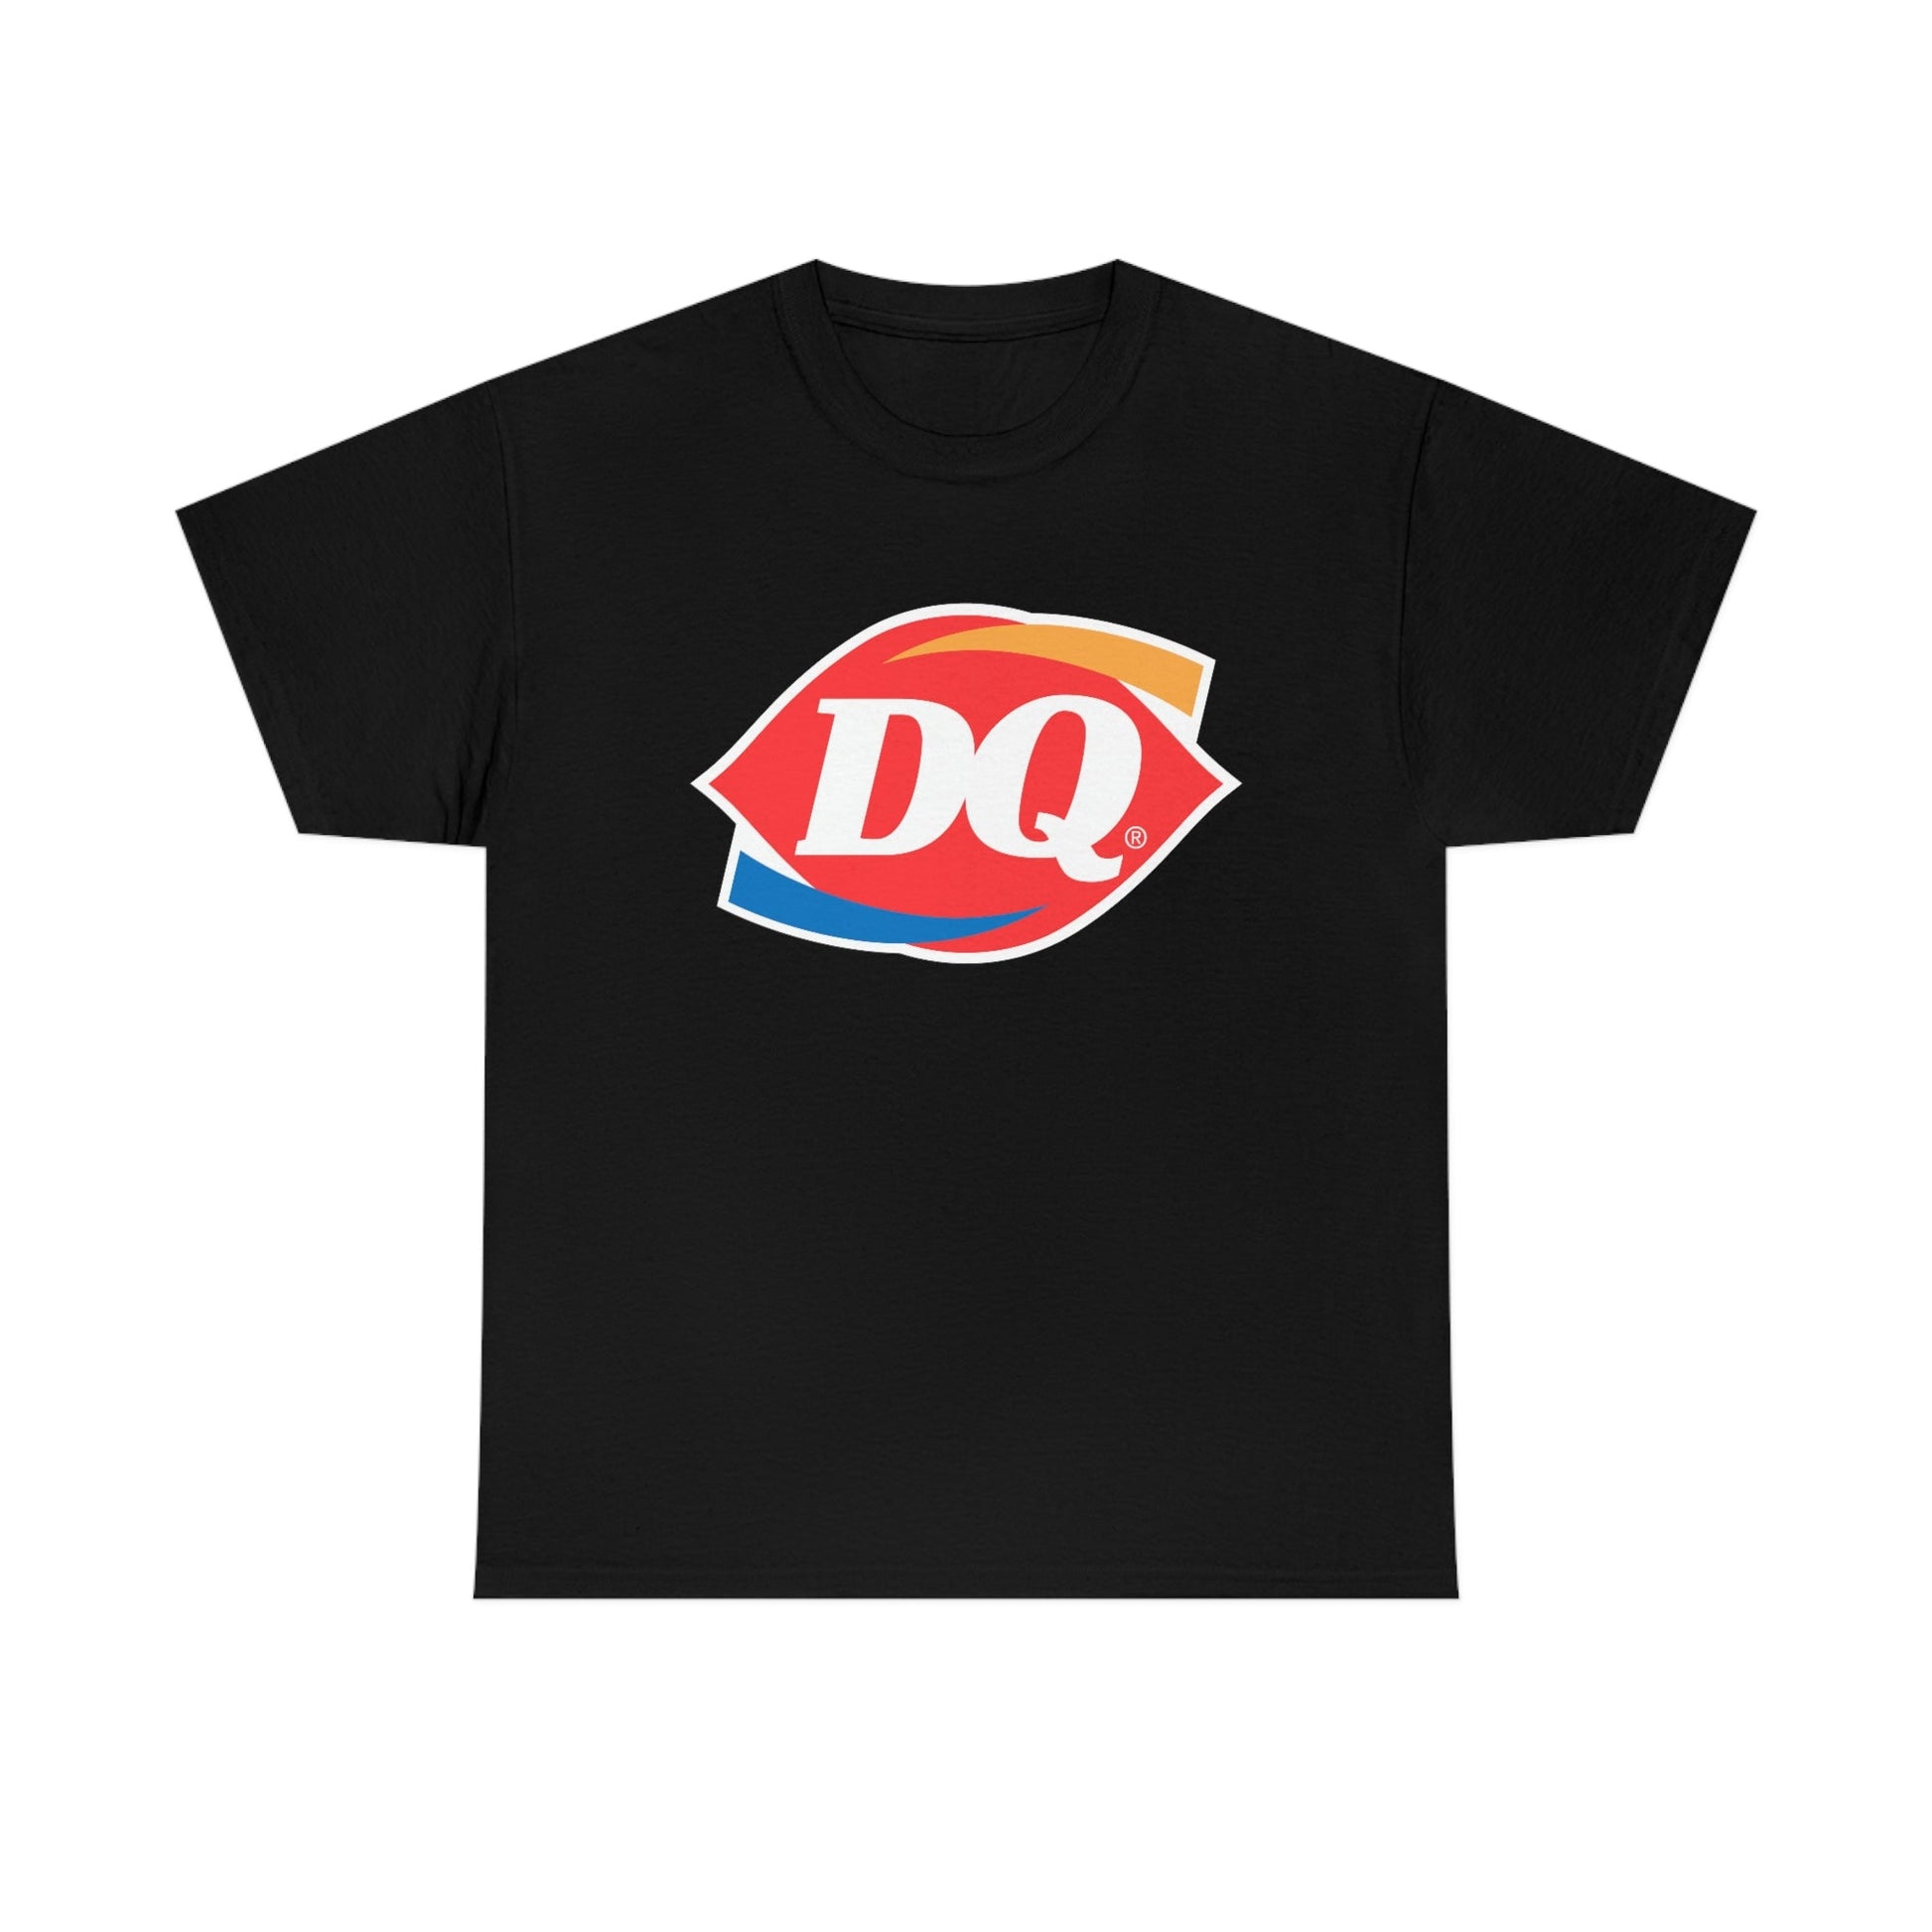 Dairy Queen T-Shirt | DQ Soft Serve Ice Cream Tee - RetroTeeShop